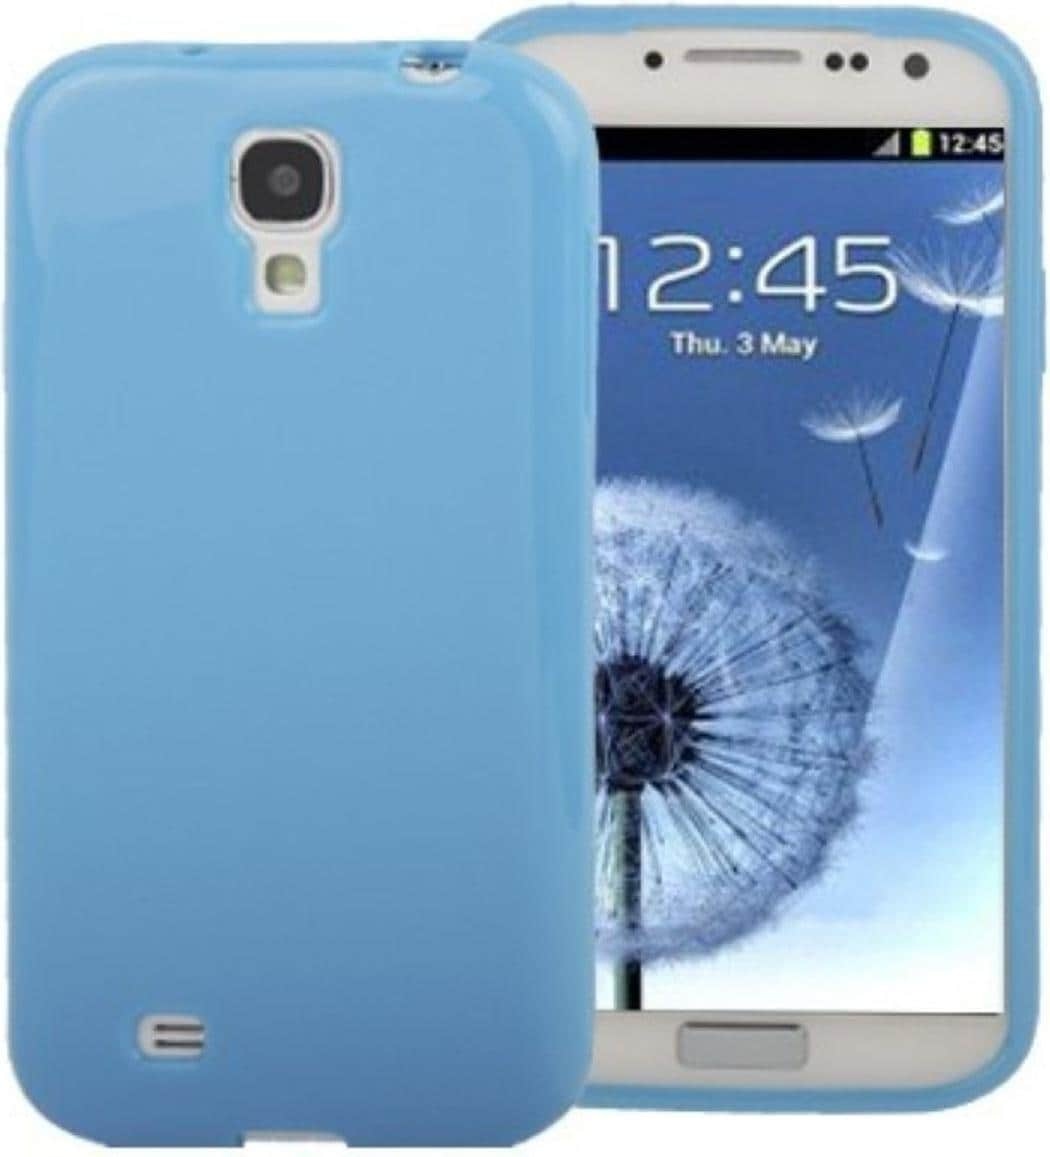 König Design Schutzhülle TPU Case für Handy Samsung Galaxy S4 GT I9500 / GT I9505 / LTE+ GT I9506 / Value Edition (Galaxy S4), Smartphone Hülle, Blau